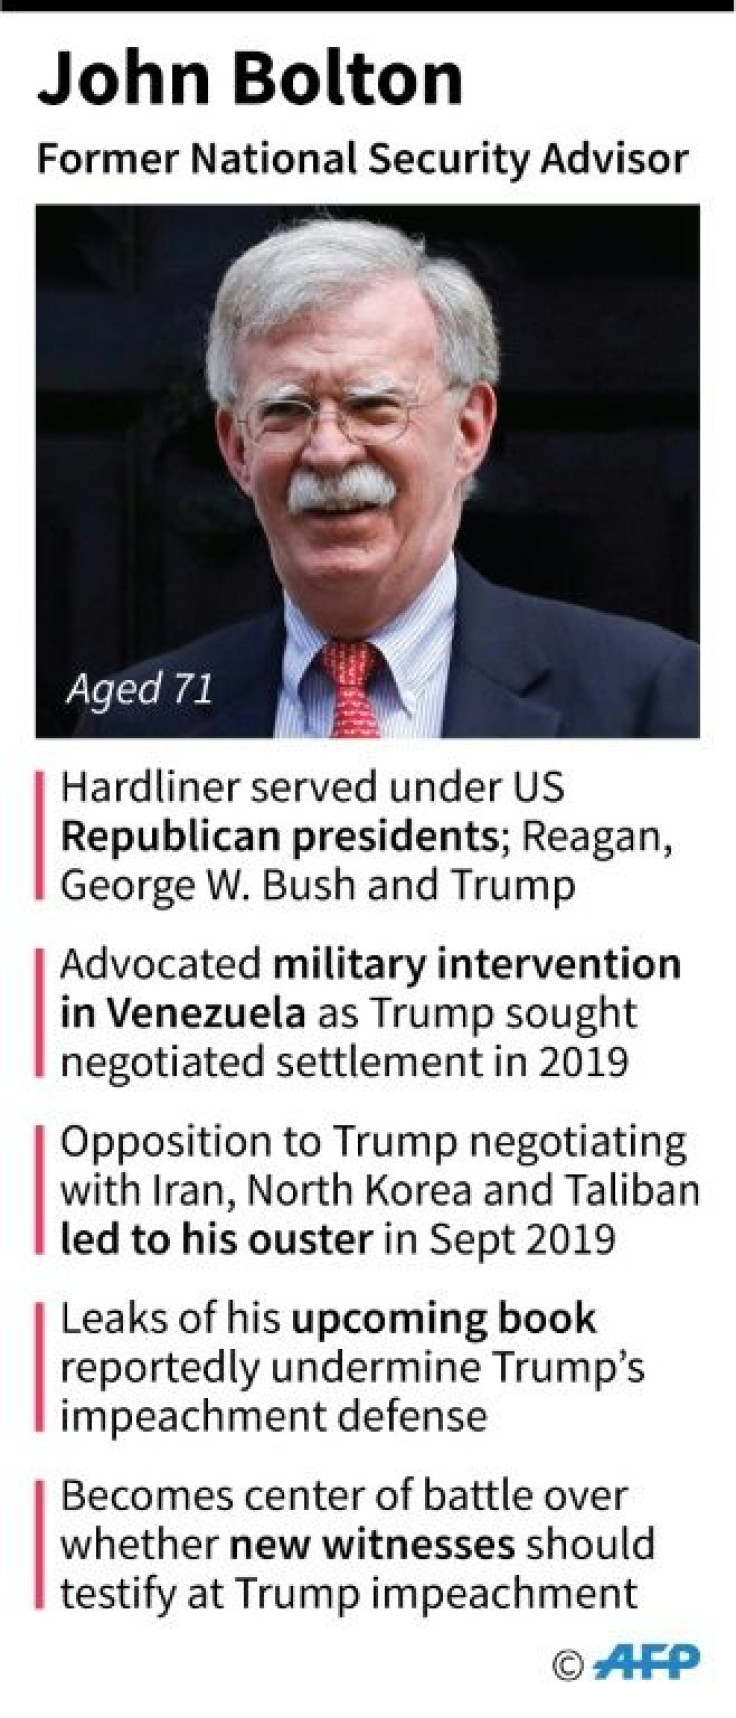 Profile of former US national security advisor John Bolton.